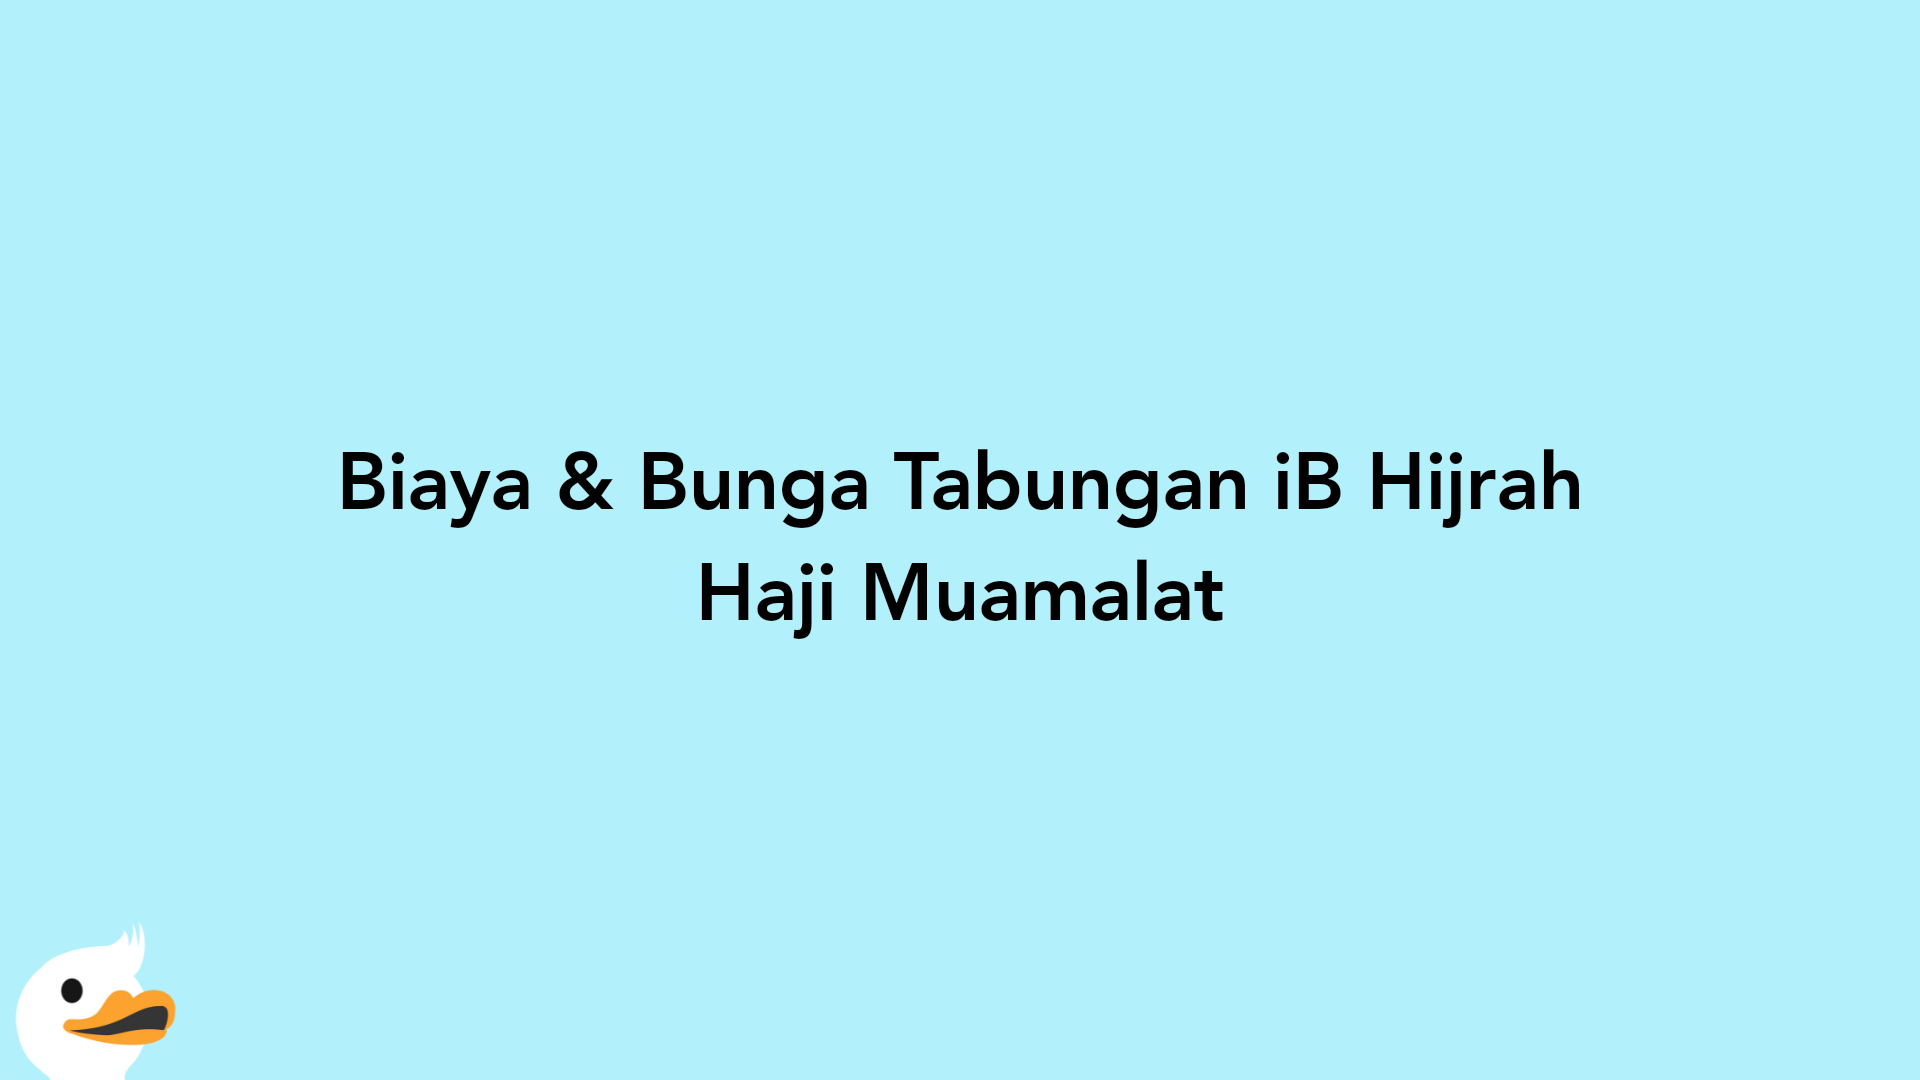 Biaya & Bunga Tabungan iB Hijrah Haji Muamalat